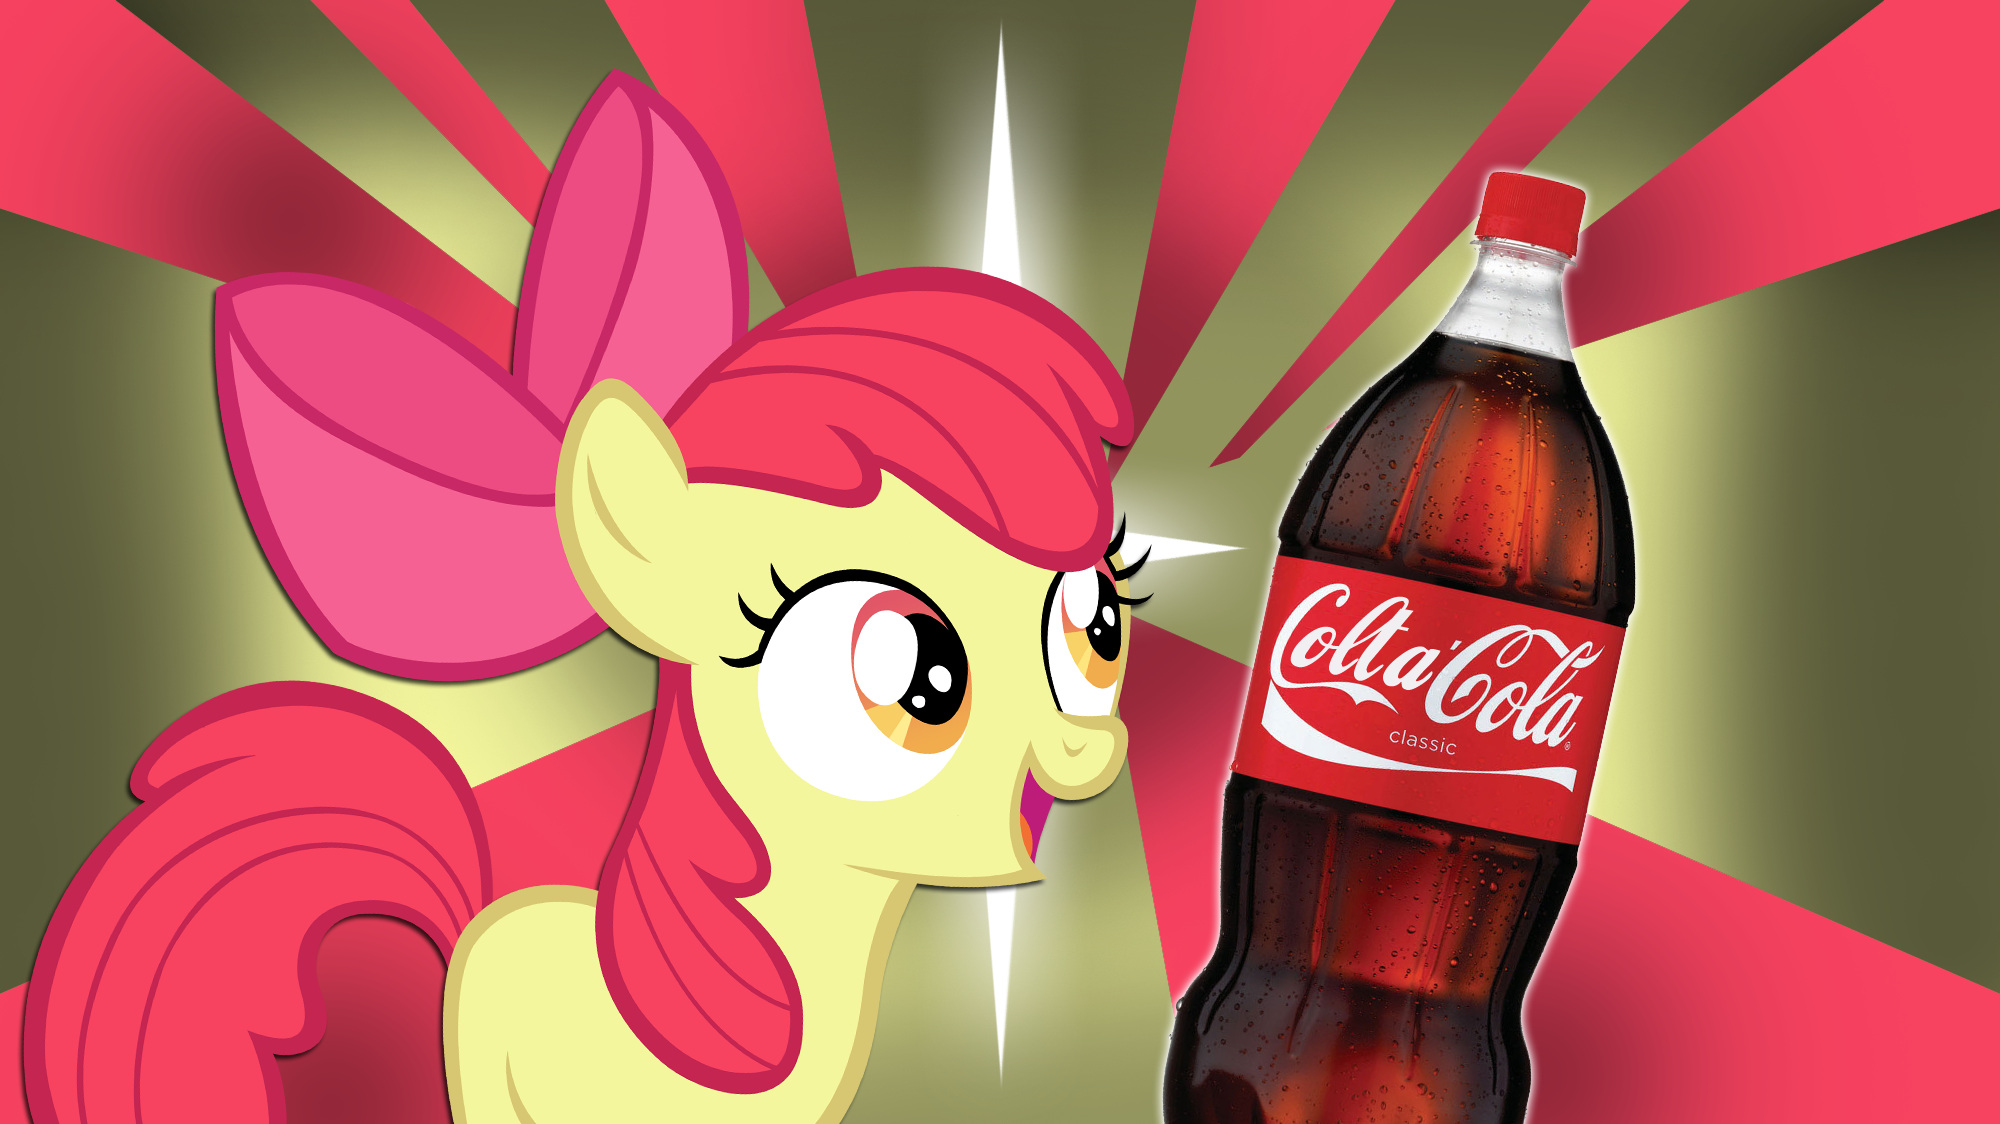 What Do Ponies Drink? - Applebloom by 4Suit and LilCinnamon